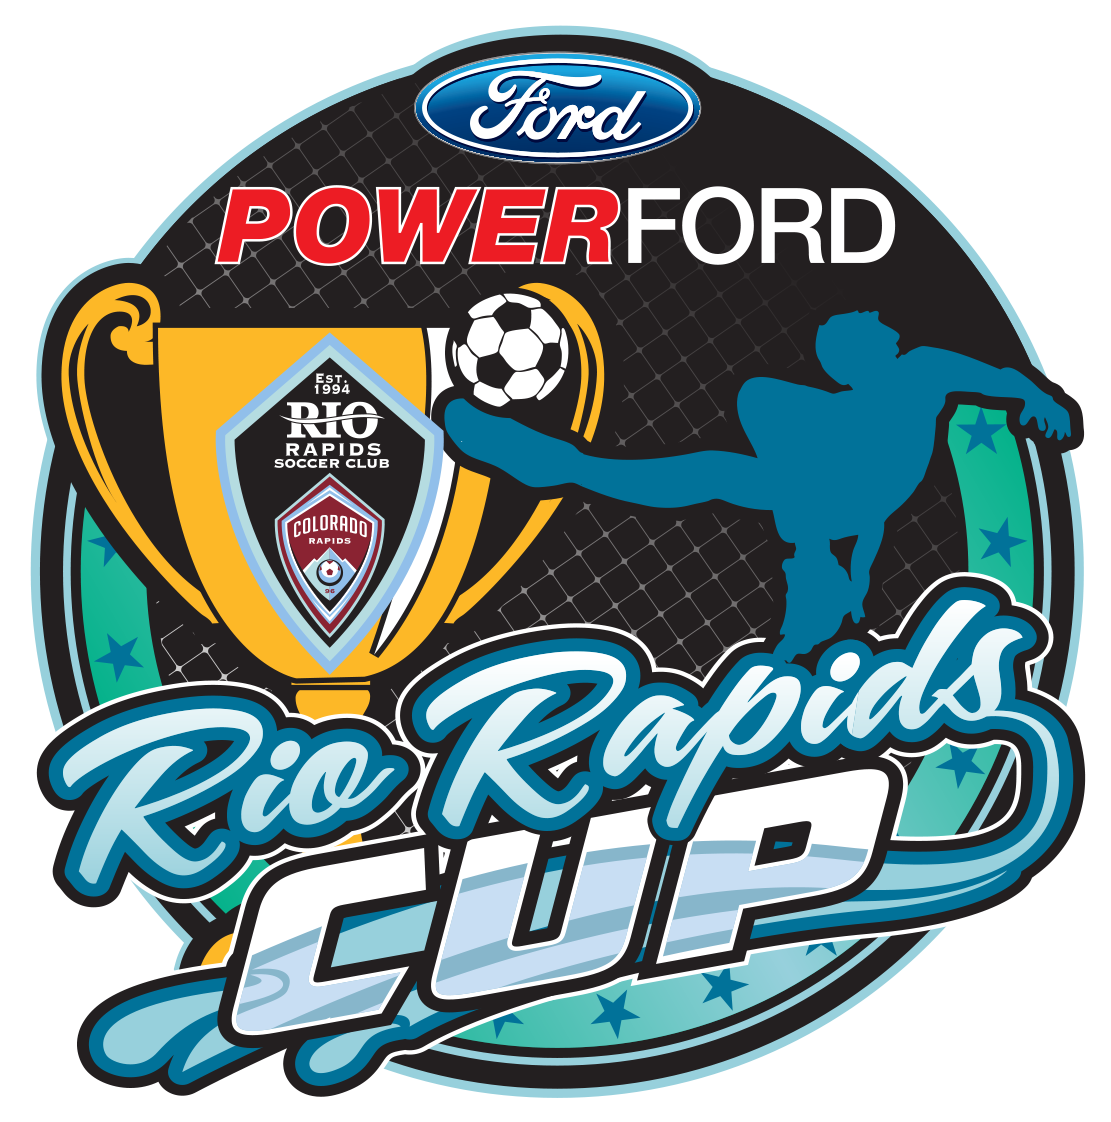 Rio rapids cup logo 120221